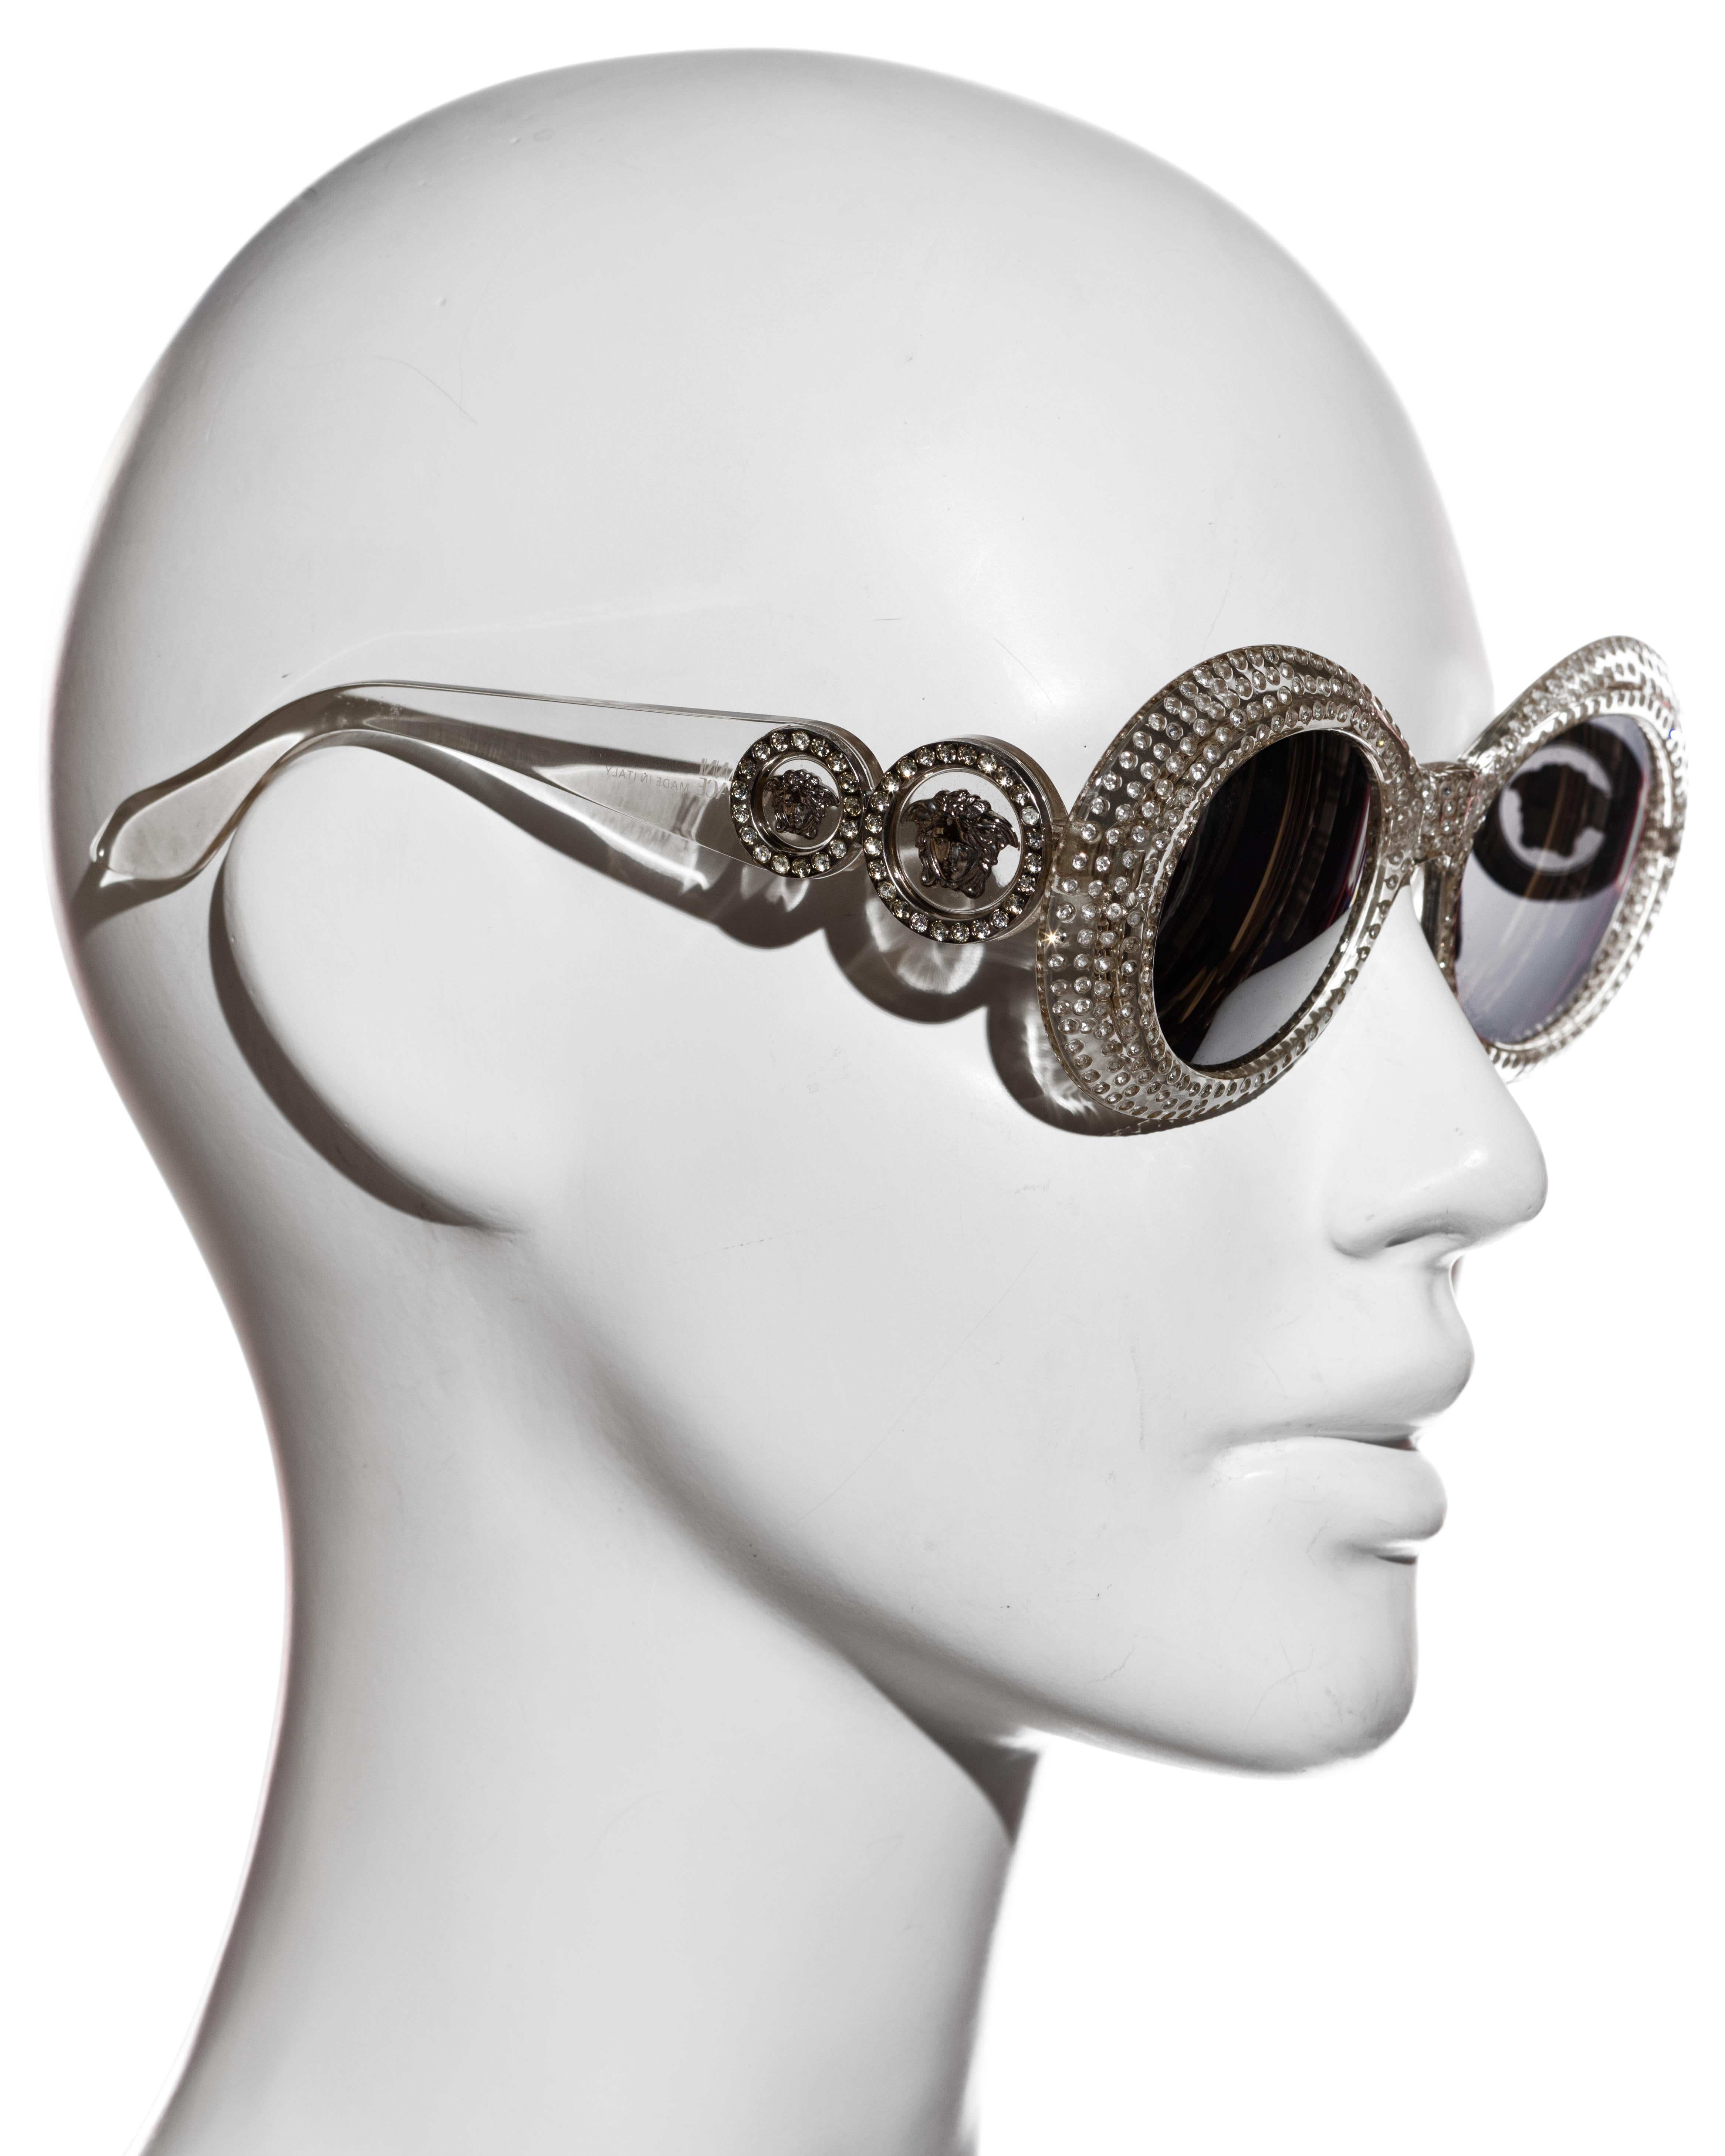 Gianni Versace unisex clear frame rhinestone sunglasses, fw 1996 2